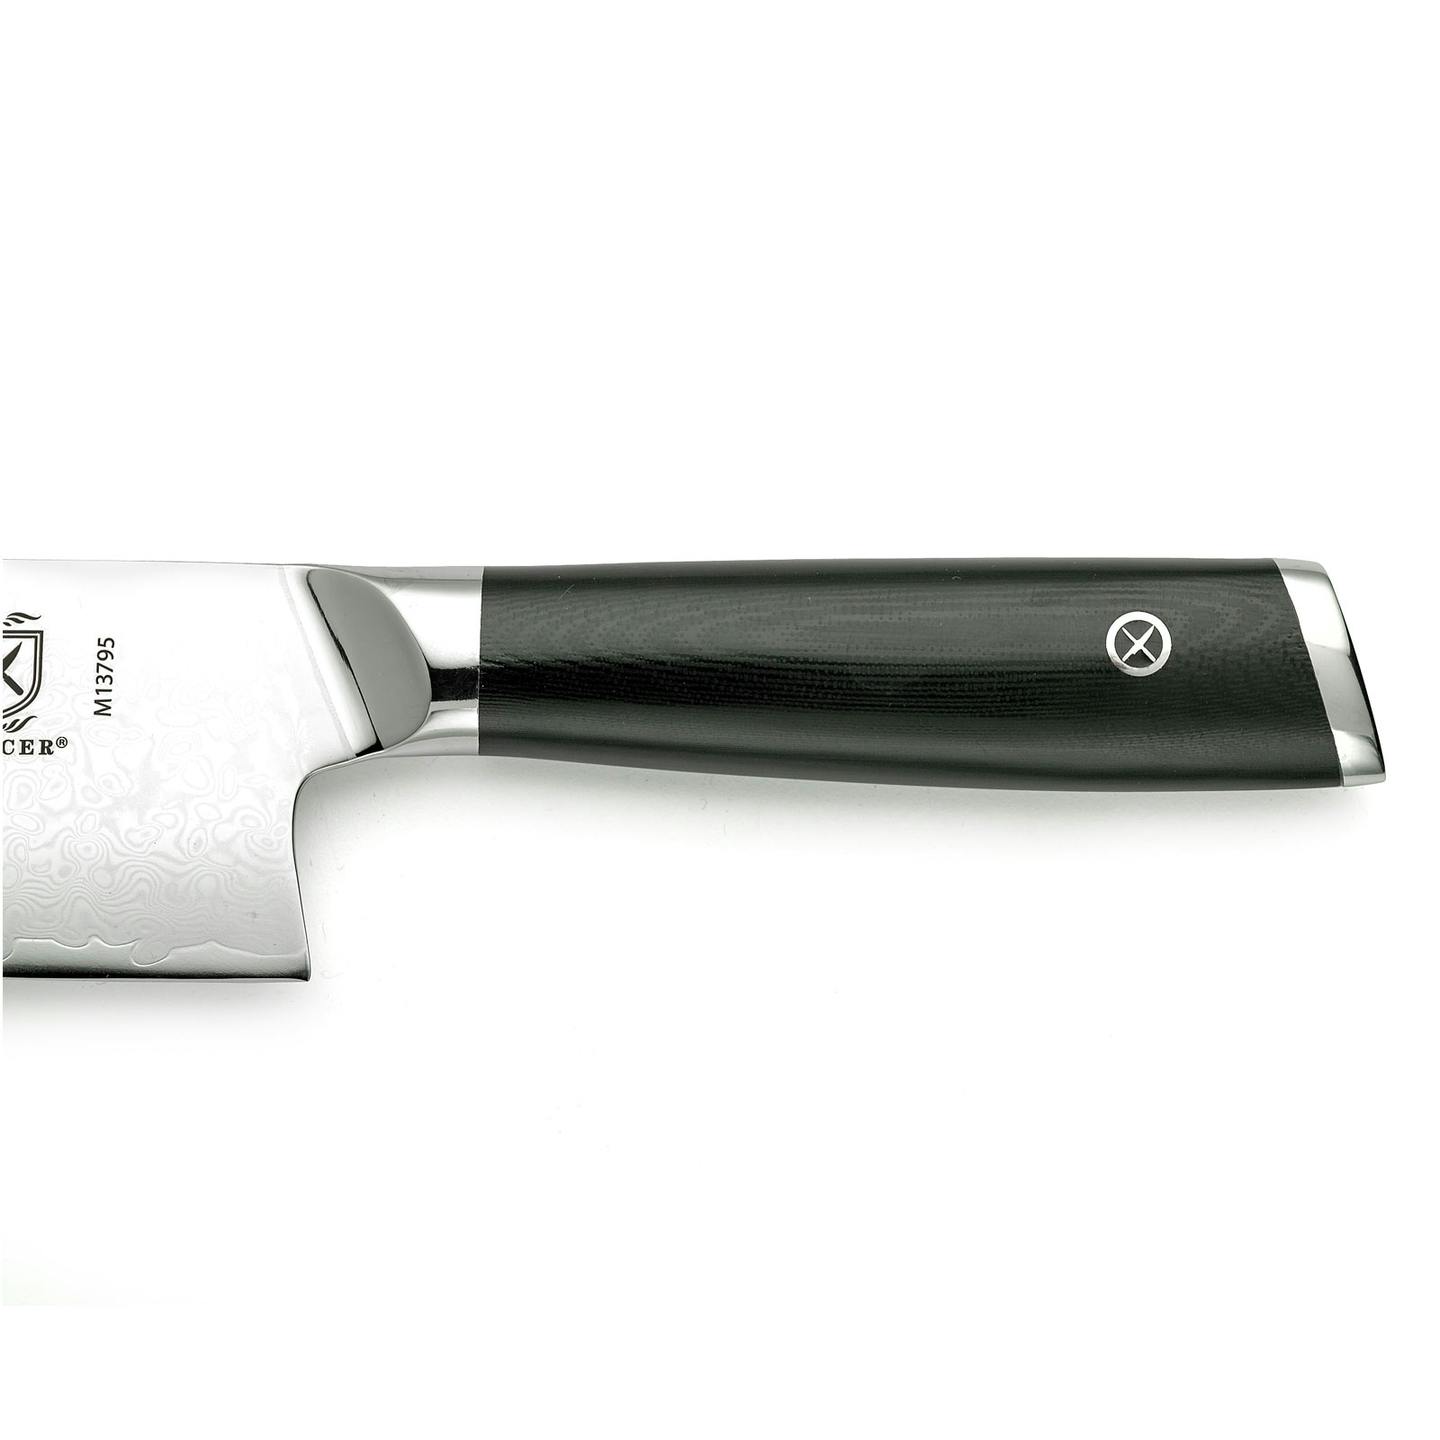 Mercer Culinary M13795 Premium Grade Super Steel, 8" The Hunter Chef's Knife, G10 Handle